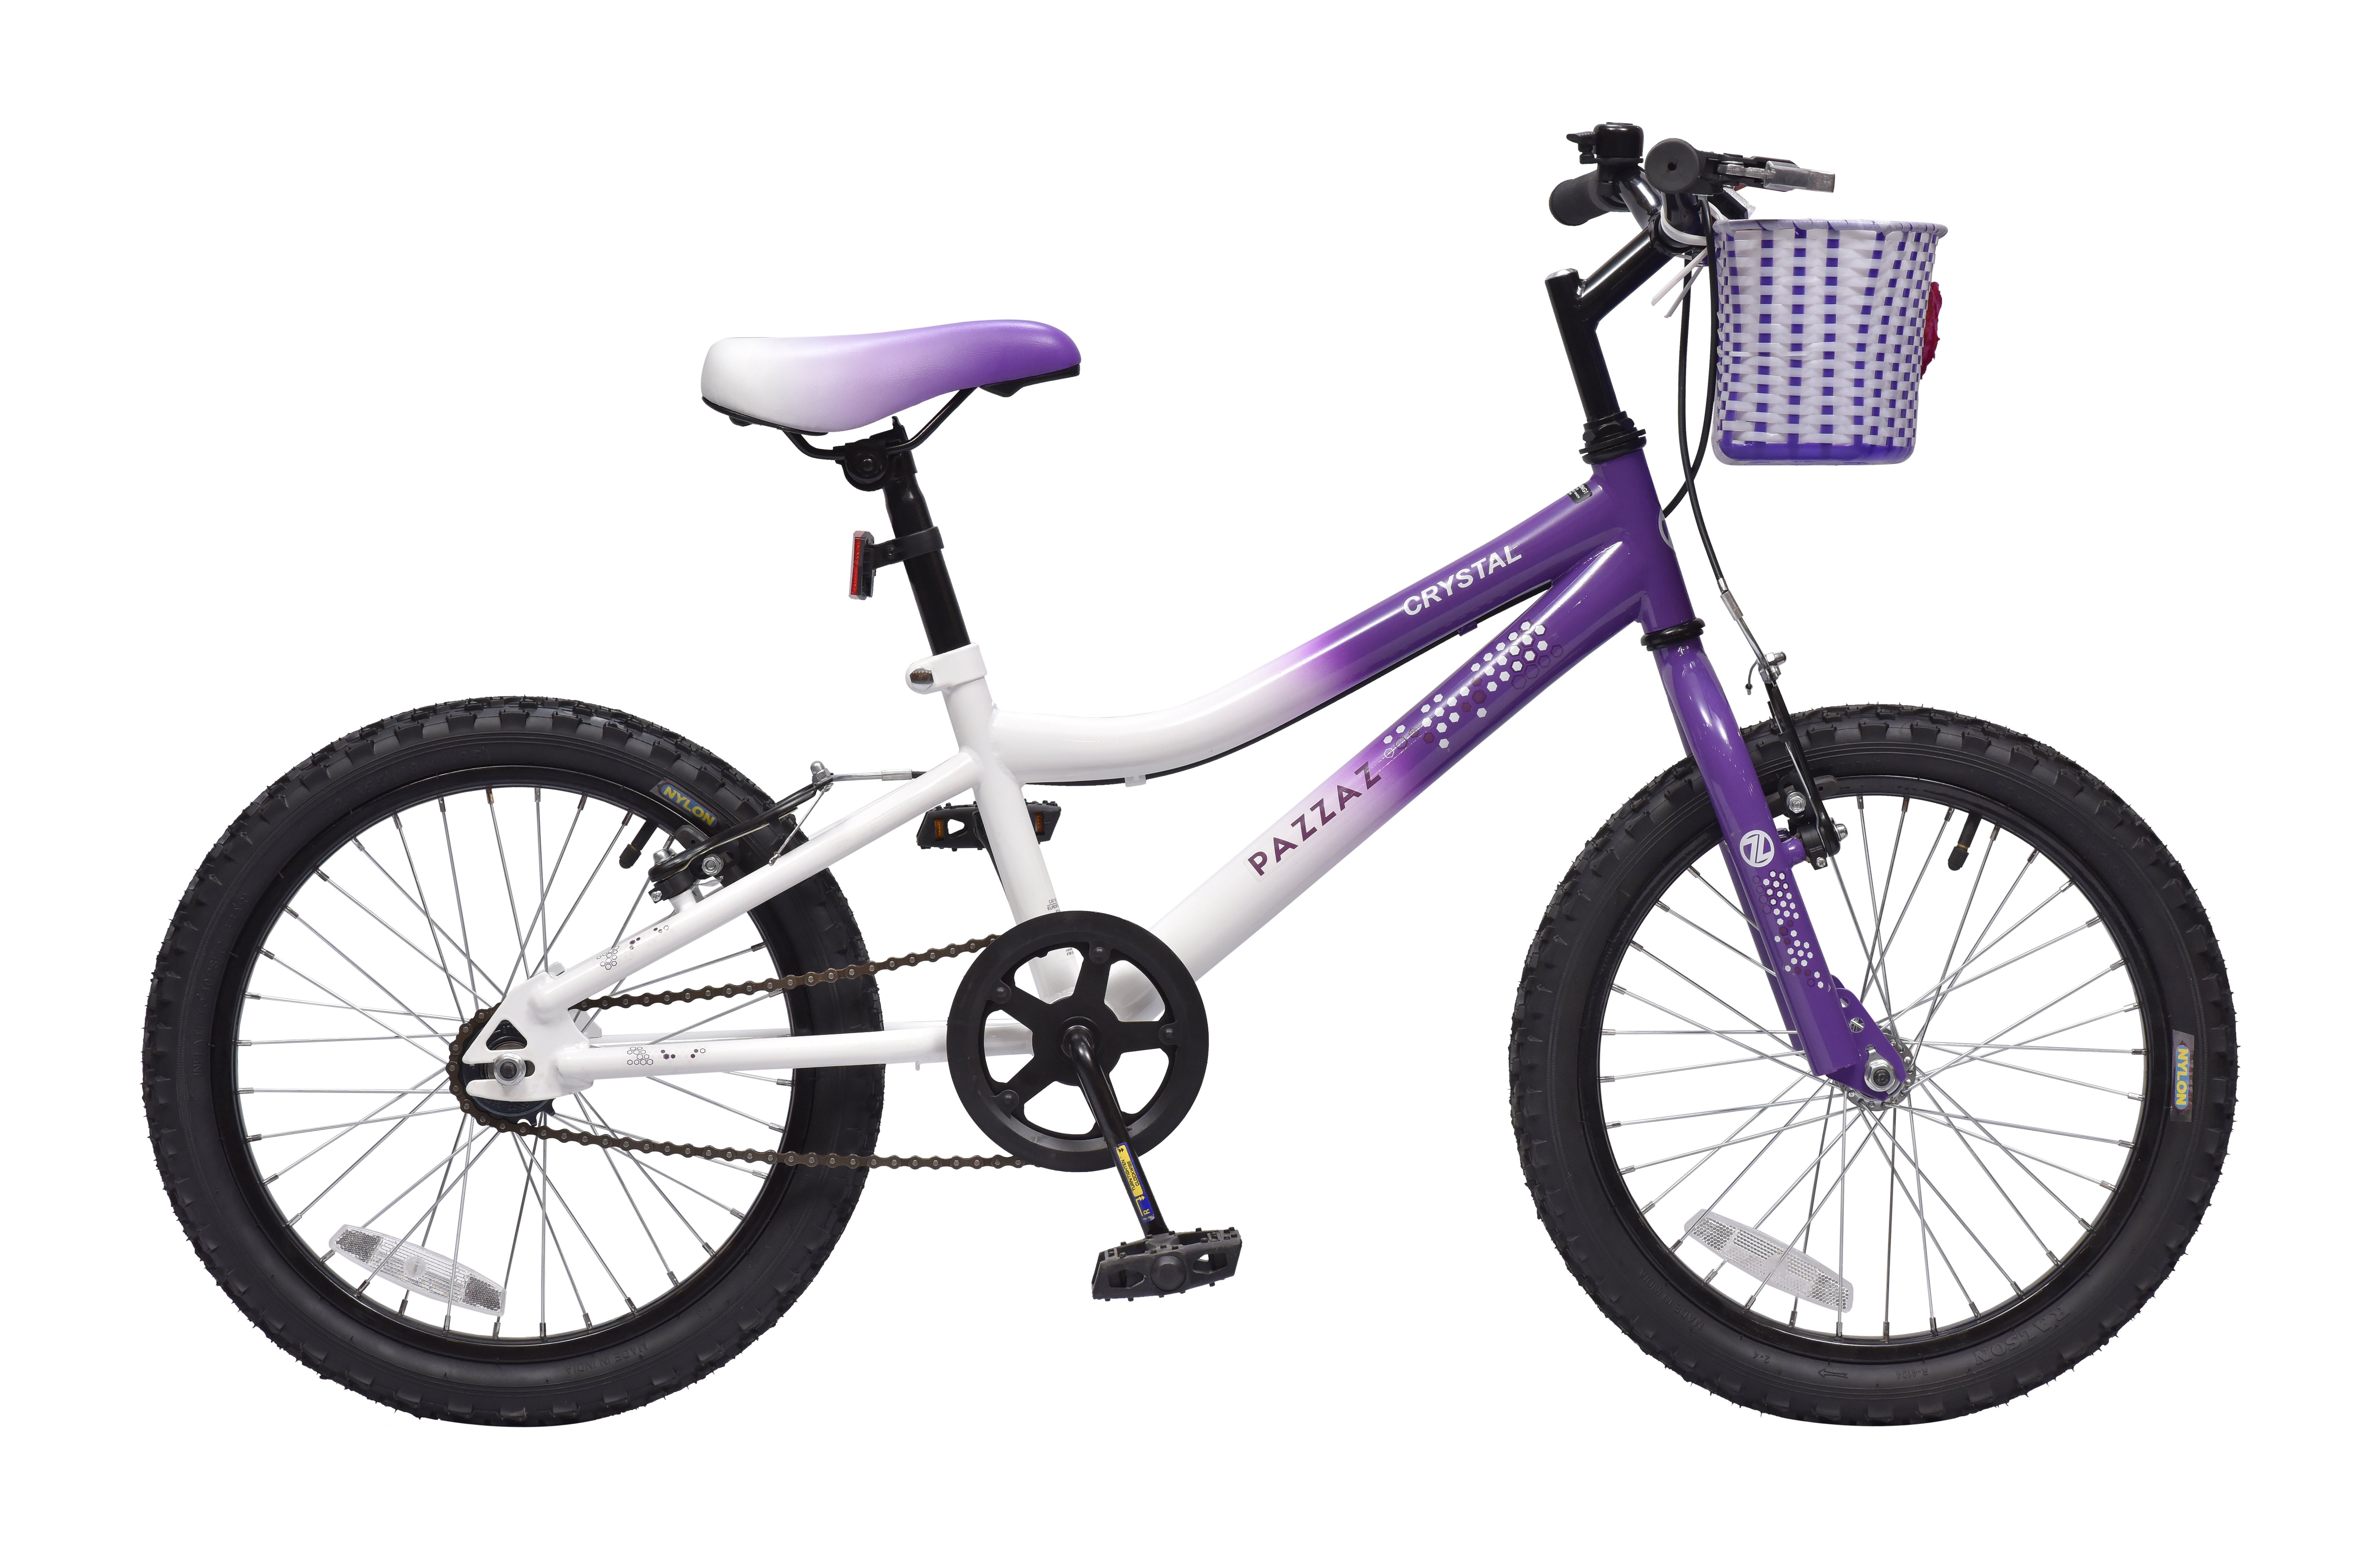 Pazzaz Crystal Girls 18 Inch Wheel Size Bike 